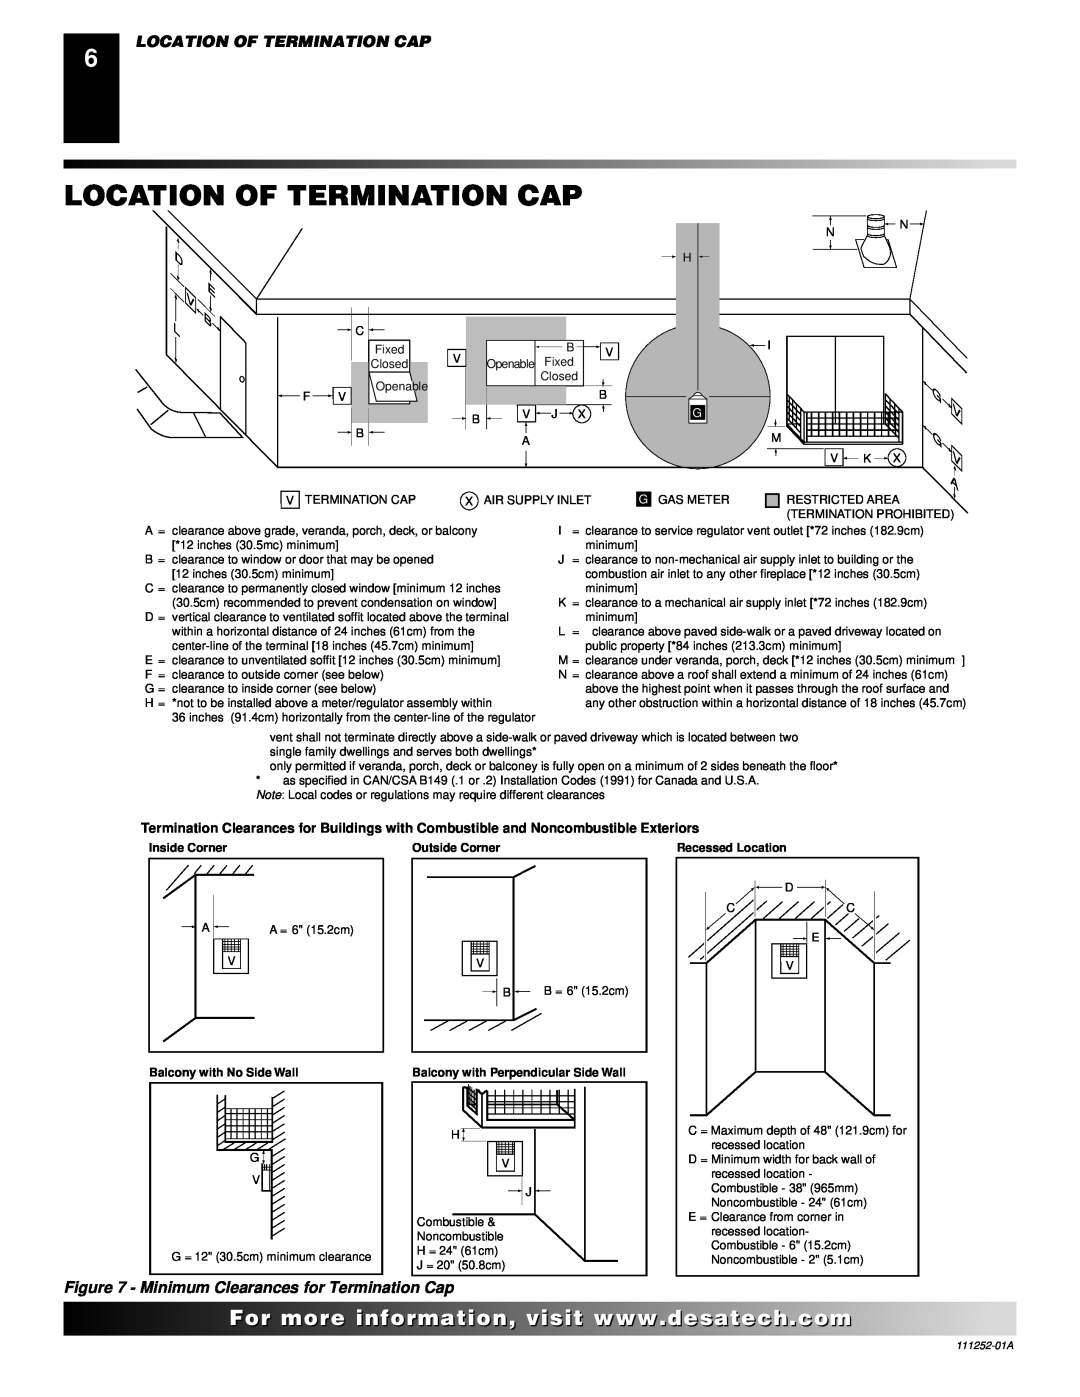 Desa CHDV36NRA Location Of Termination Cap, D E B L, V G V A, Minimum Clearances for Termination Cap, Inside Corner 